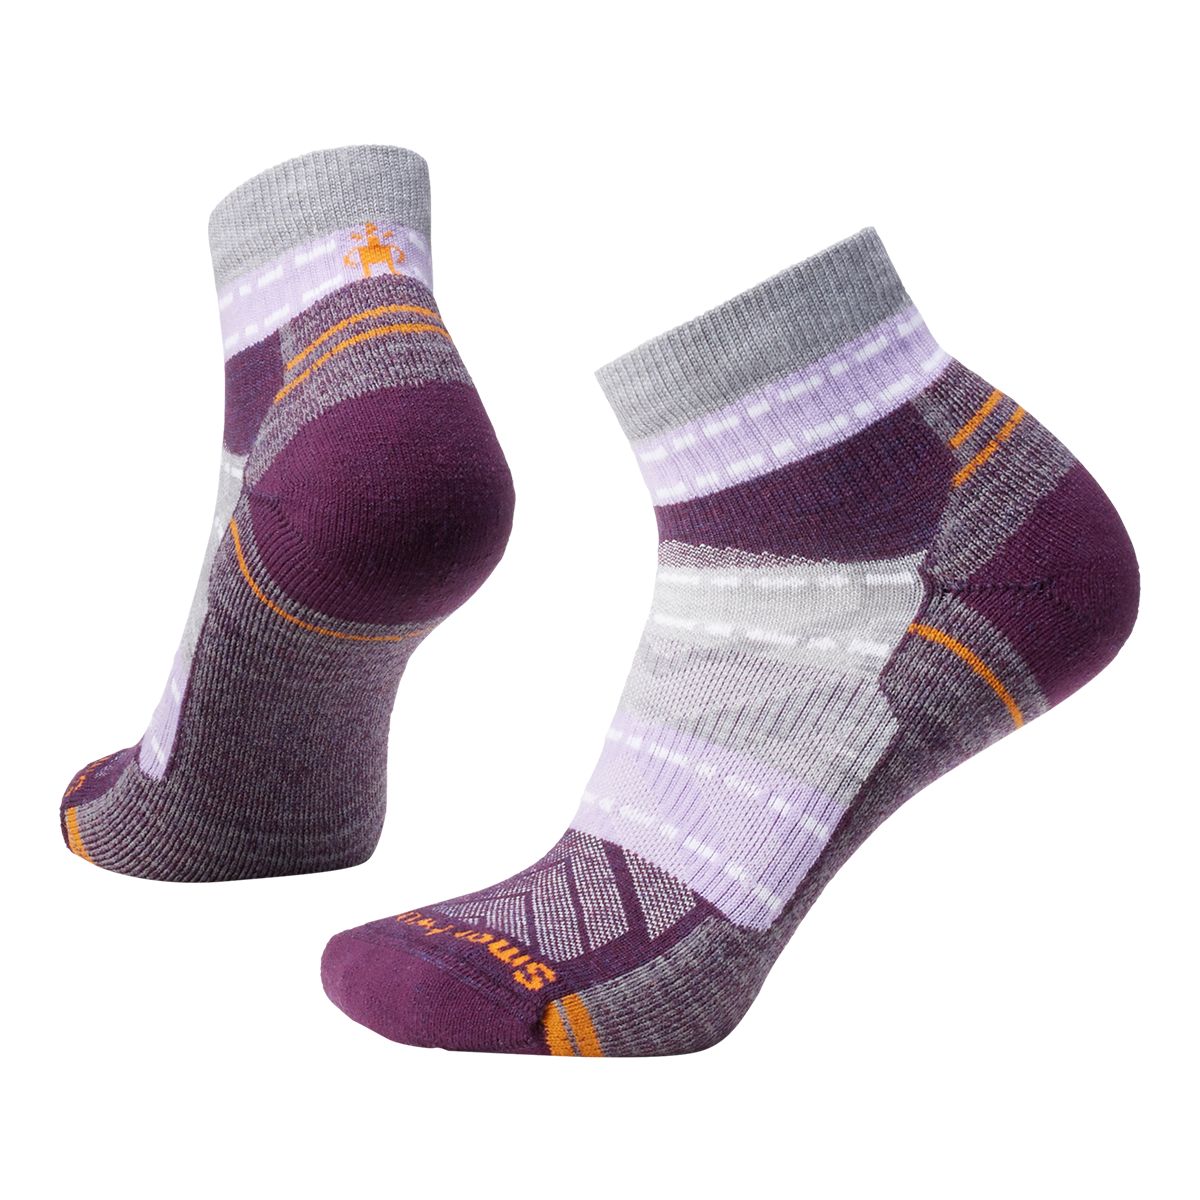 WindRiver Women's Merino Comfort Crew Socks